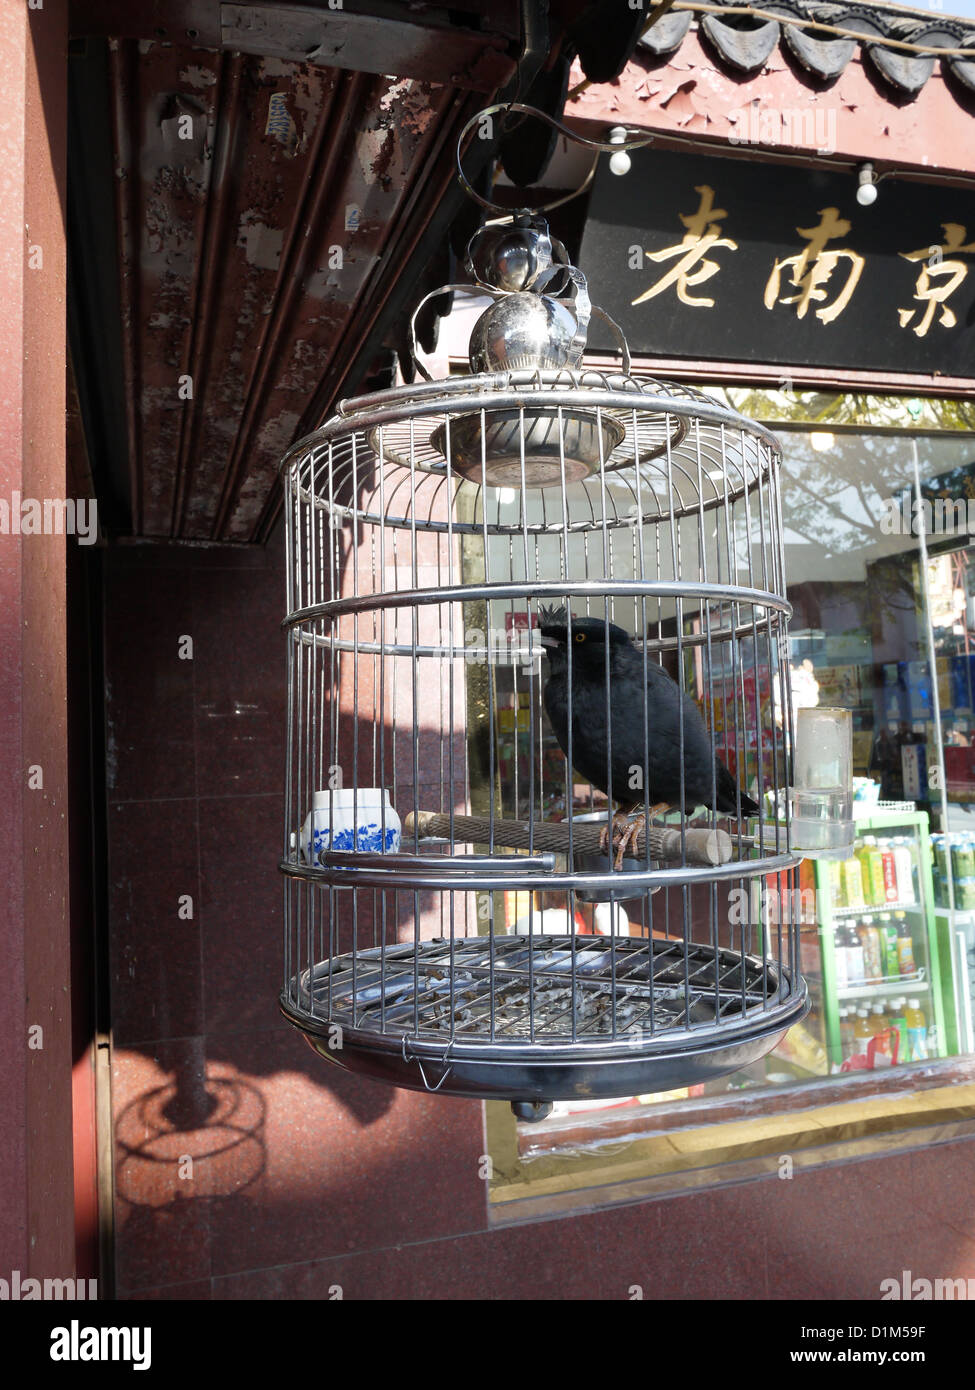 metal bird cage chinese pet retiree hobby Stock Photo - Alamy